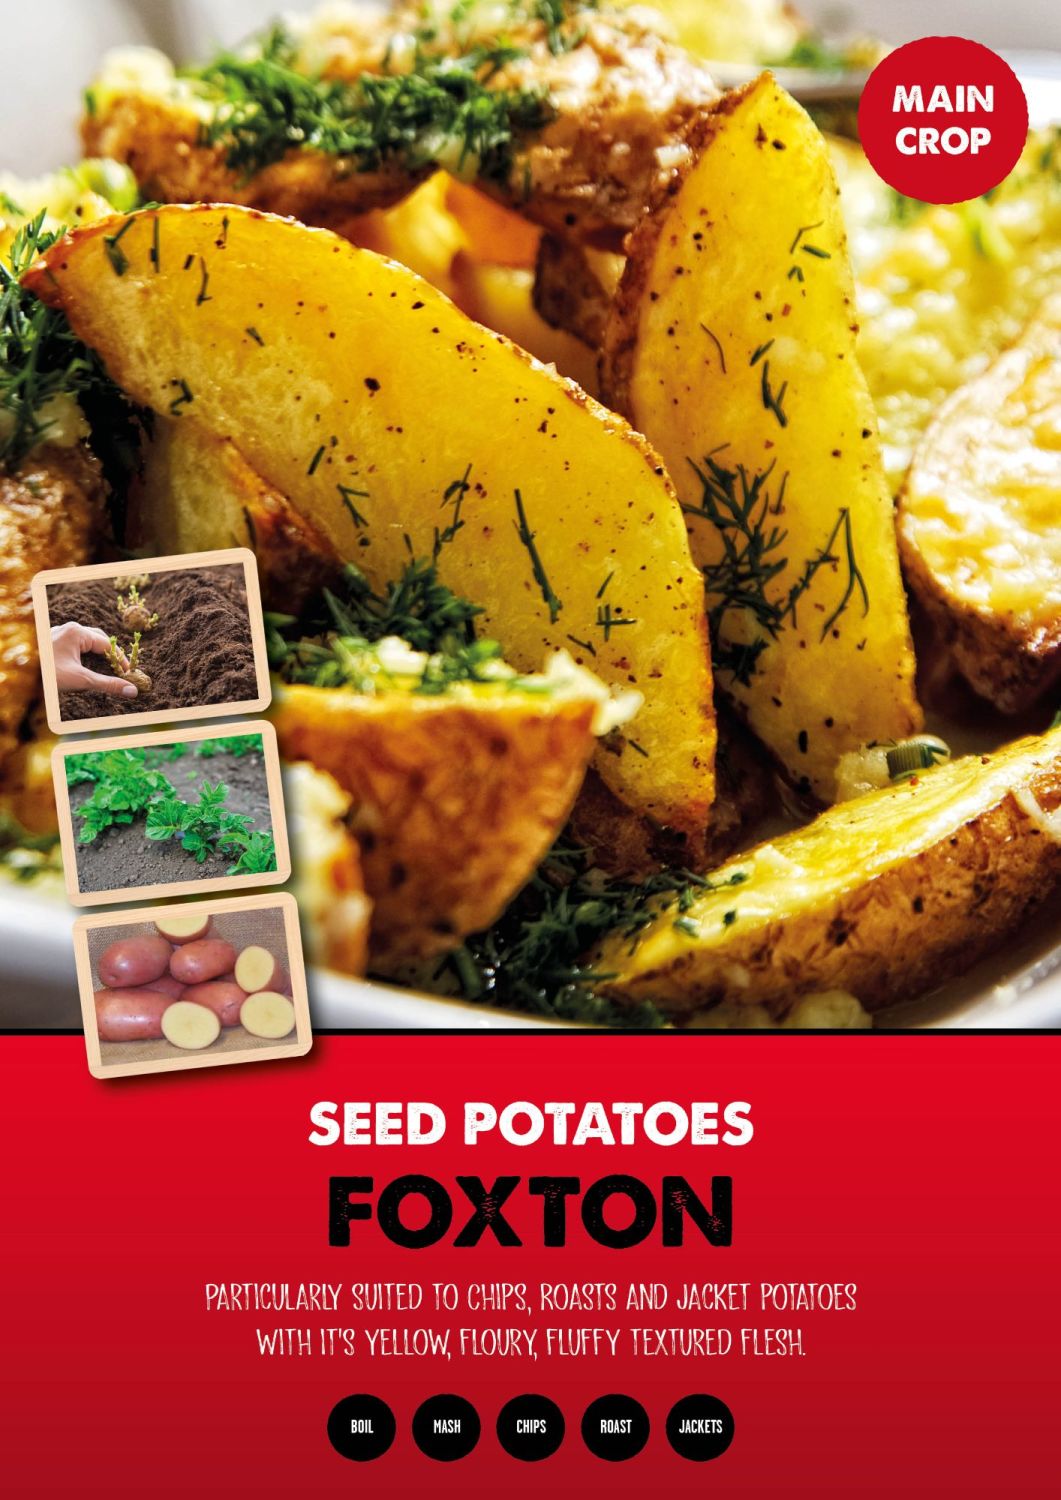 Foxton seed potatoes main crop